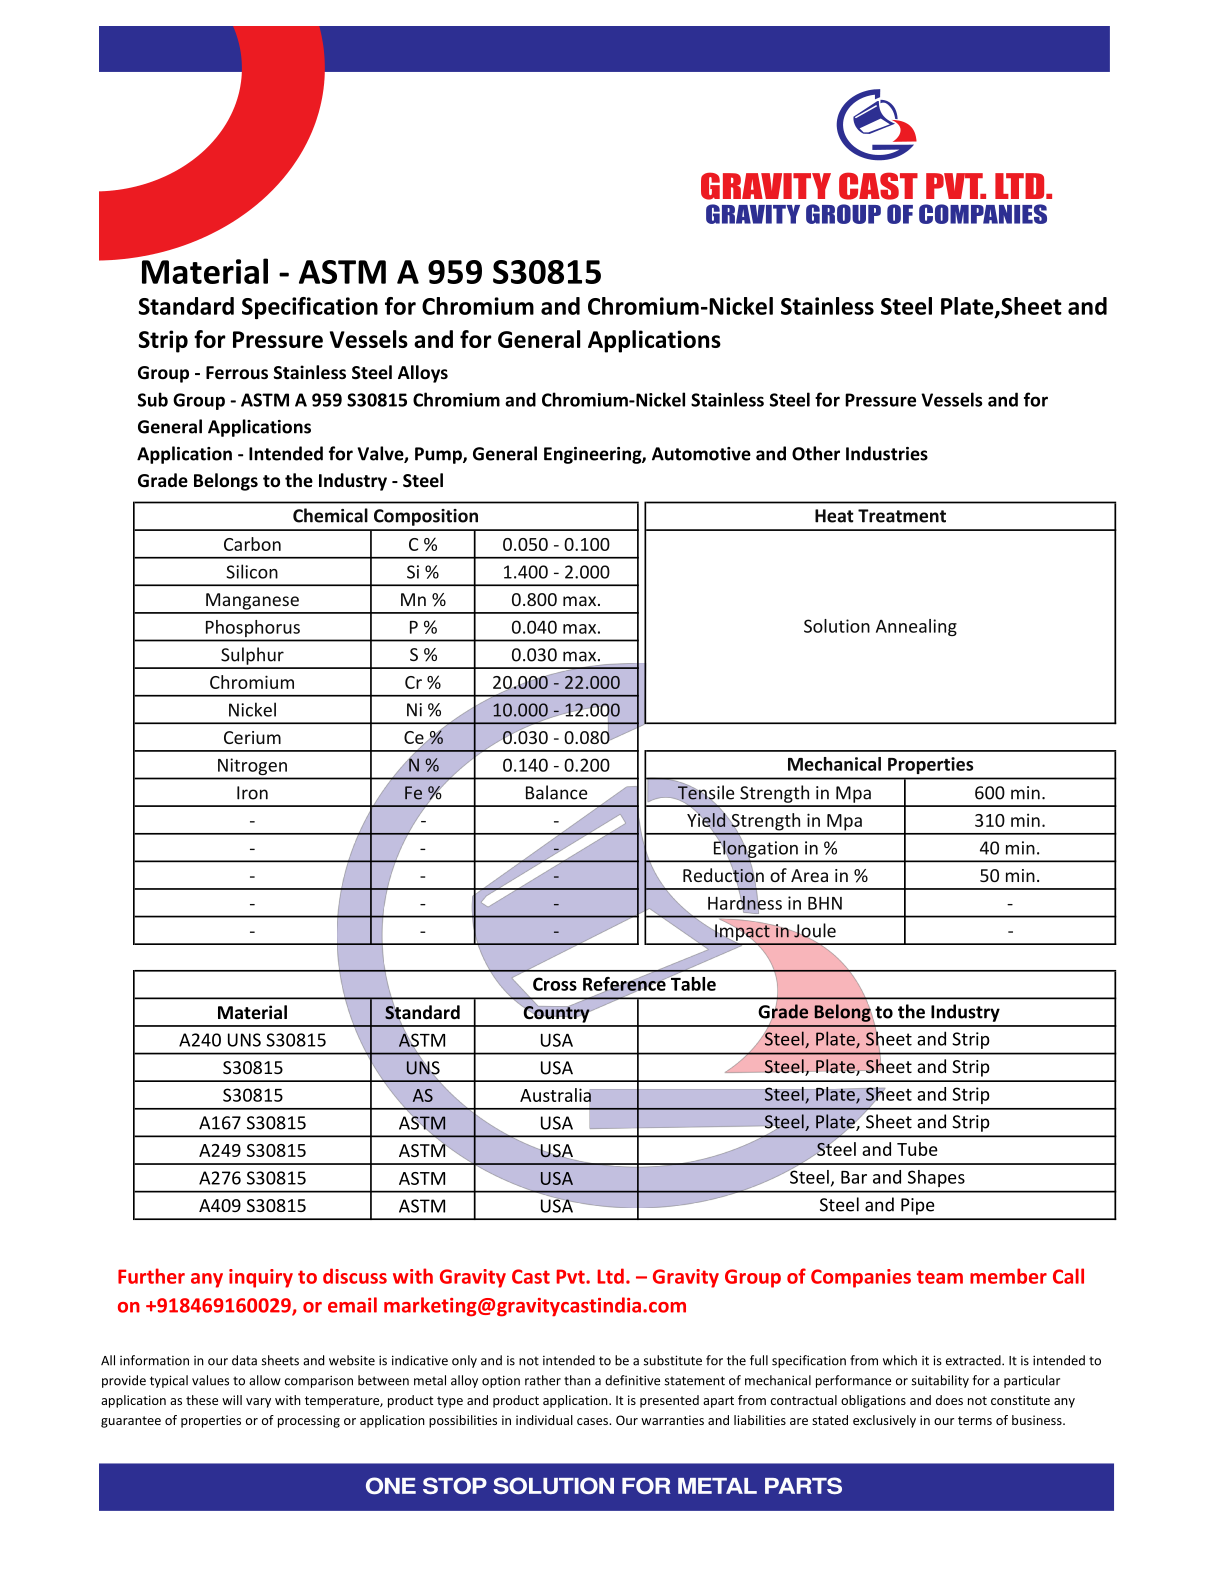 ASTM A 959 S30815.pdf